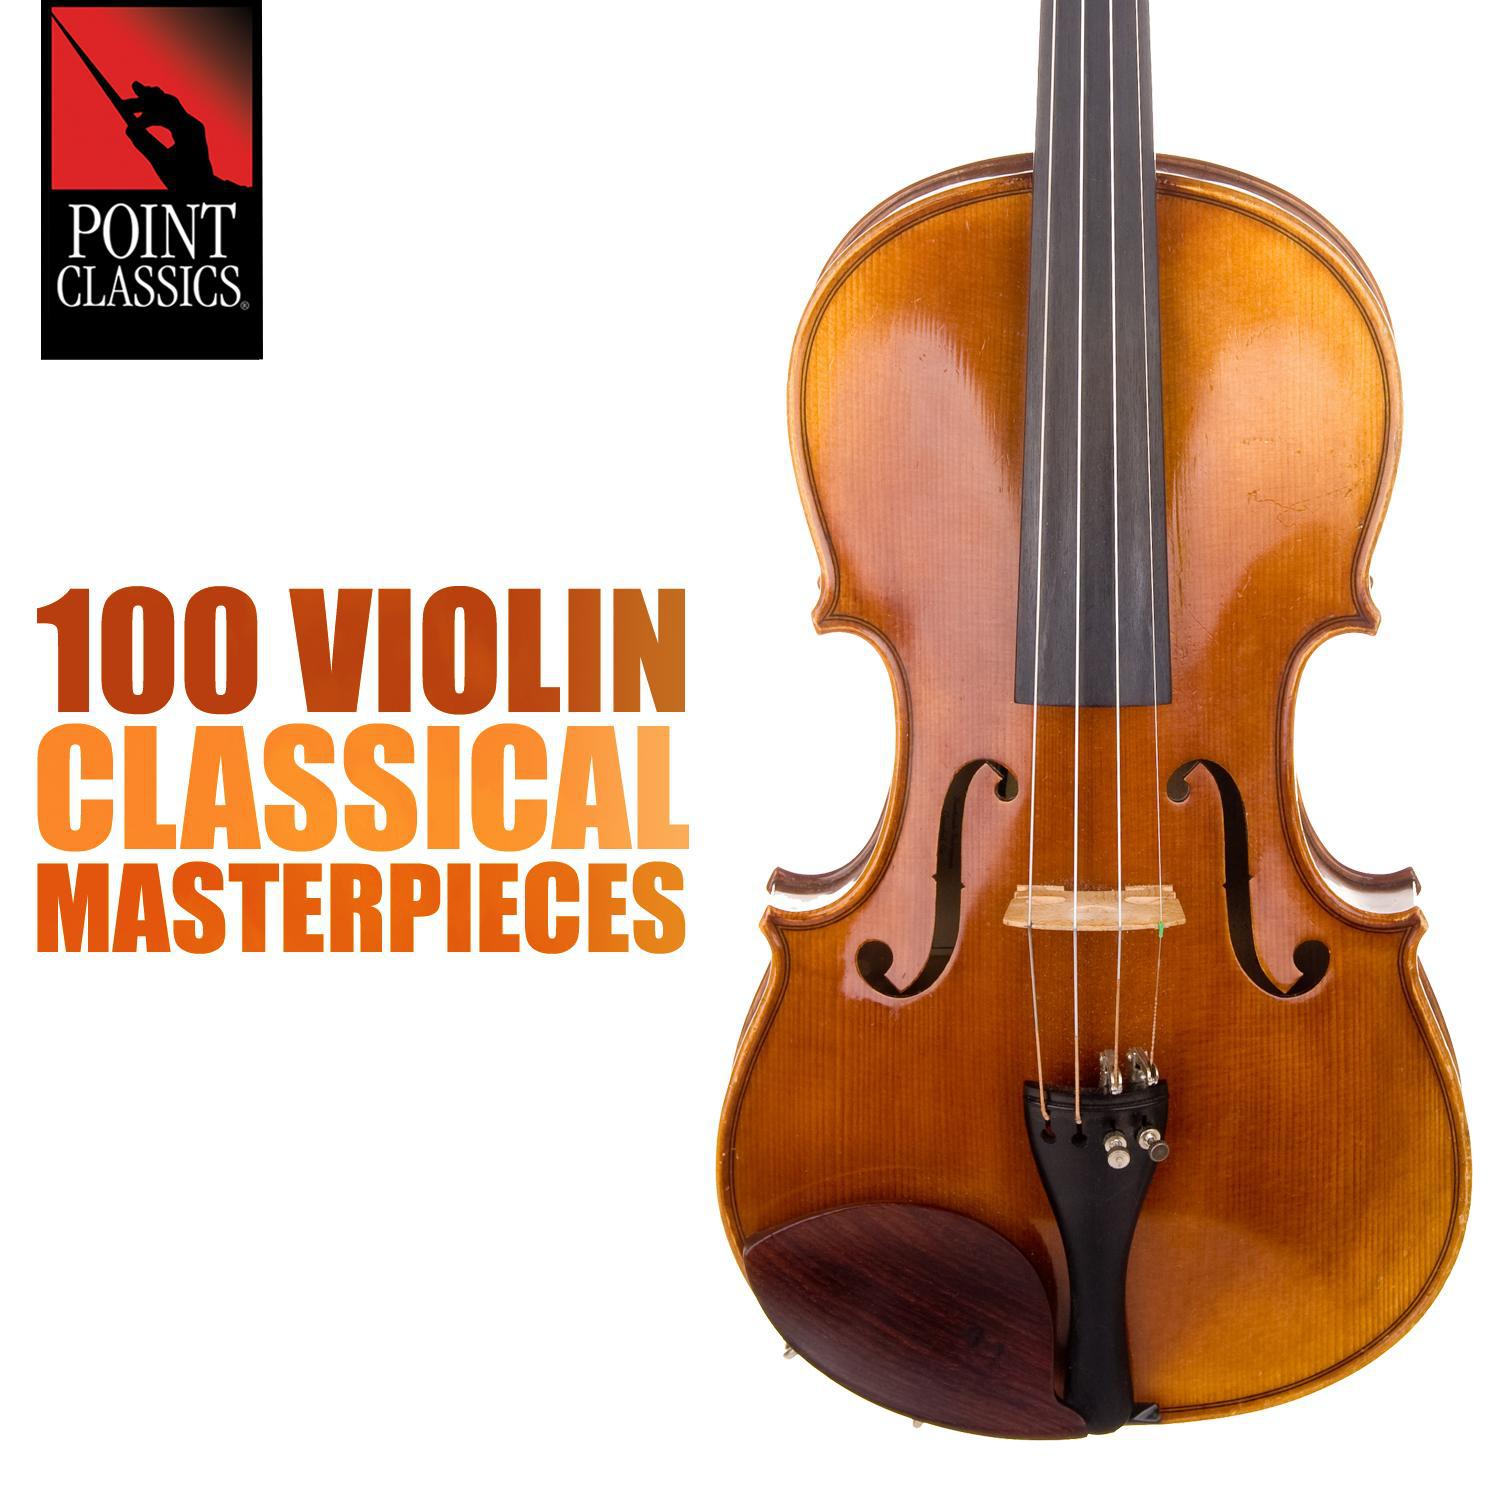 Violin Romance No. 1 in G Major, Op. 40